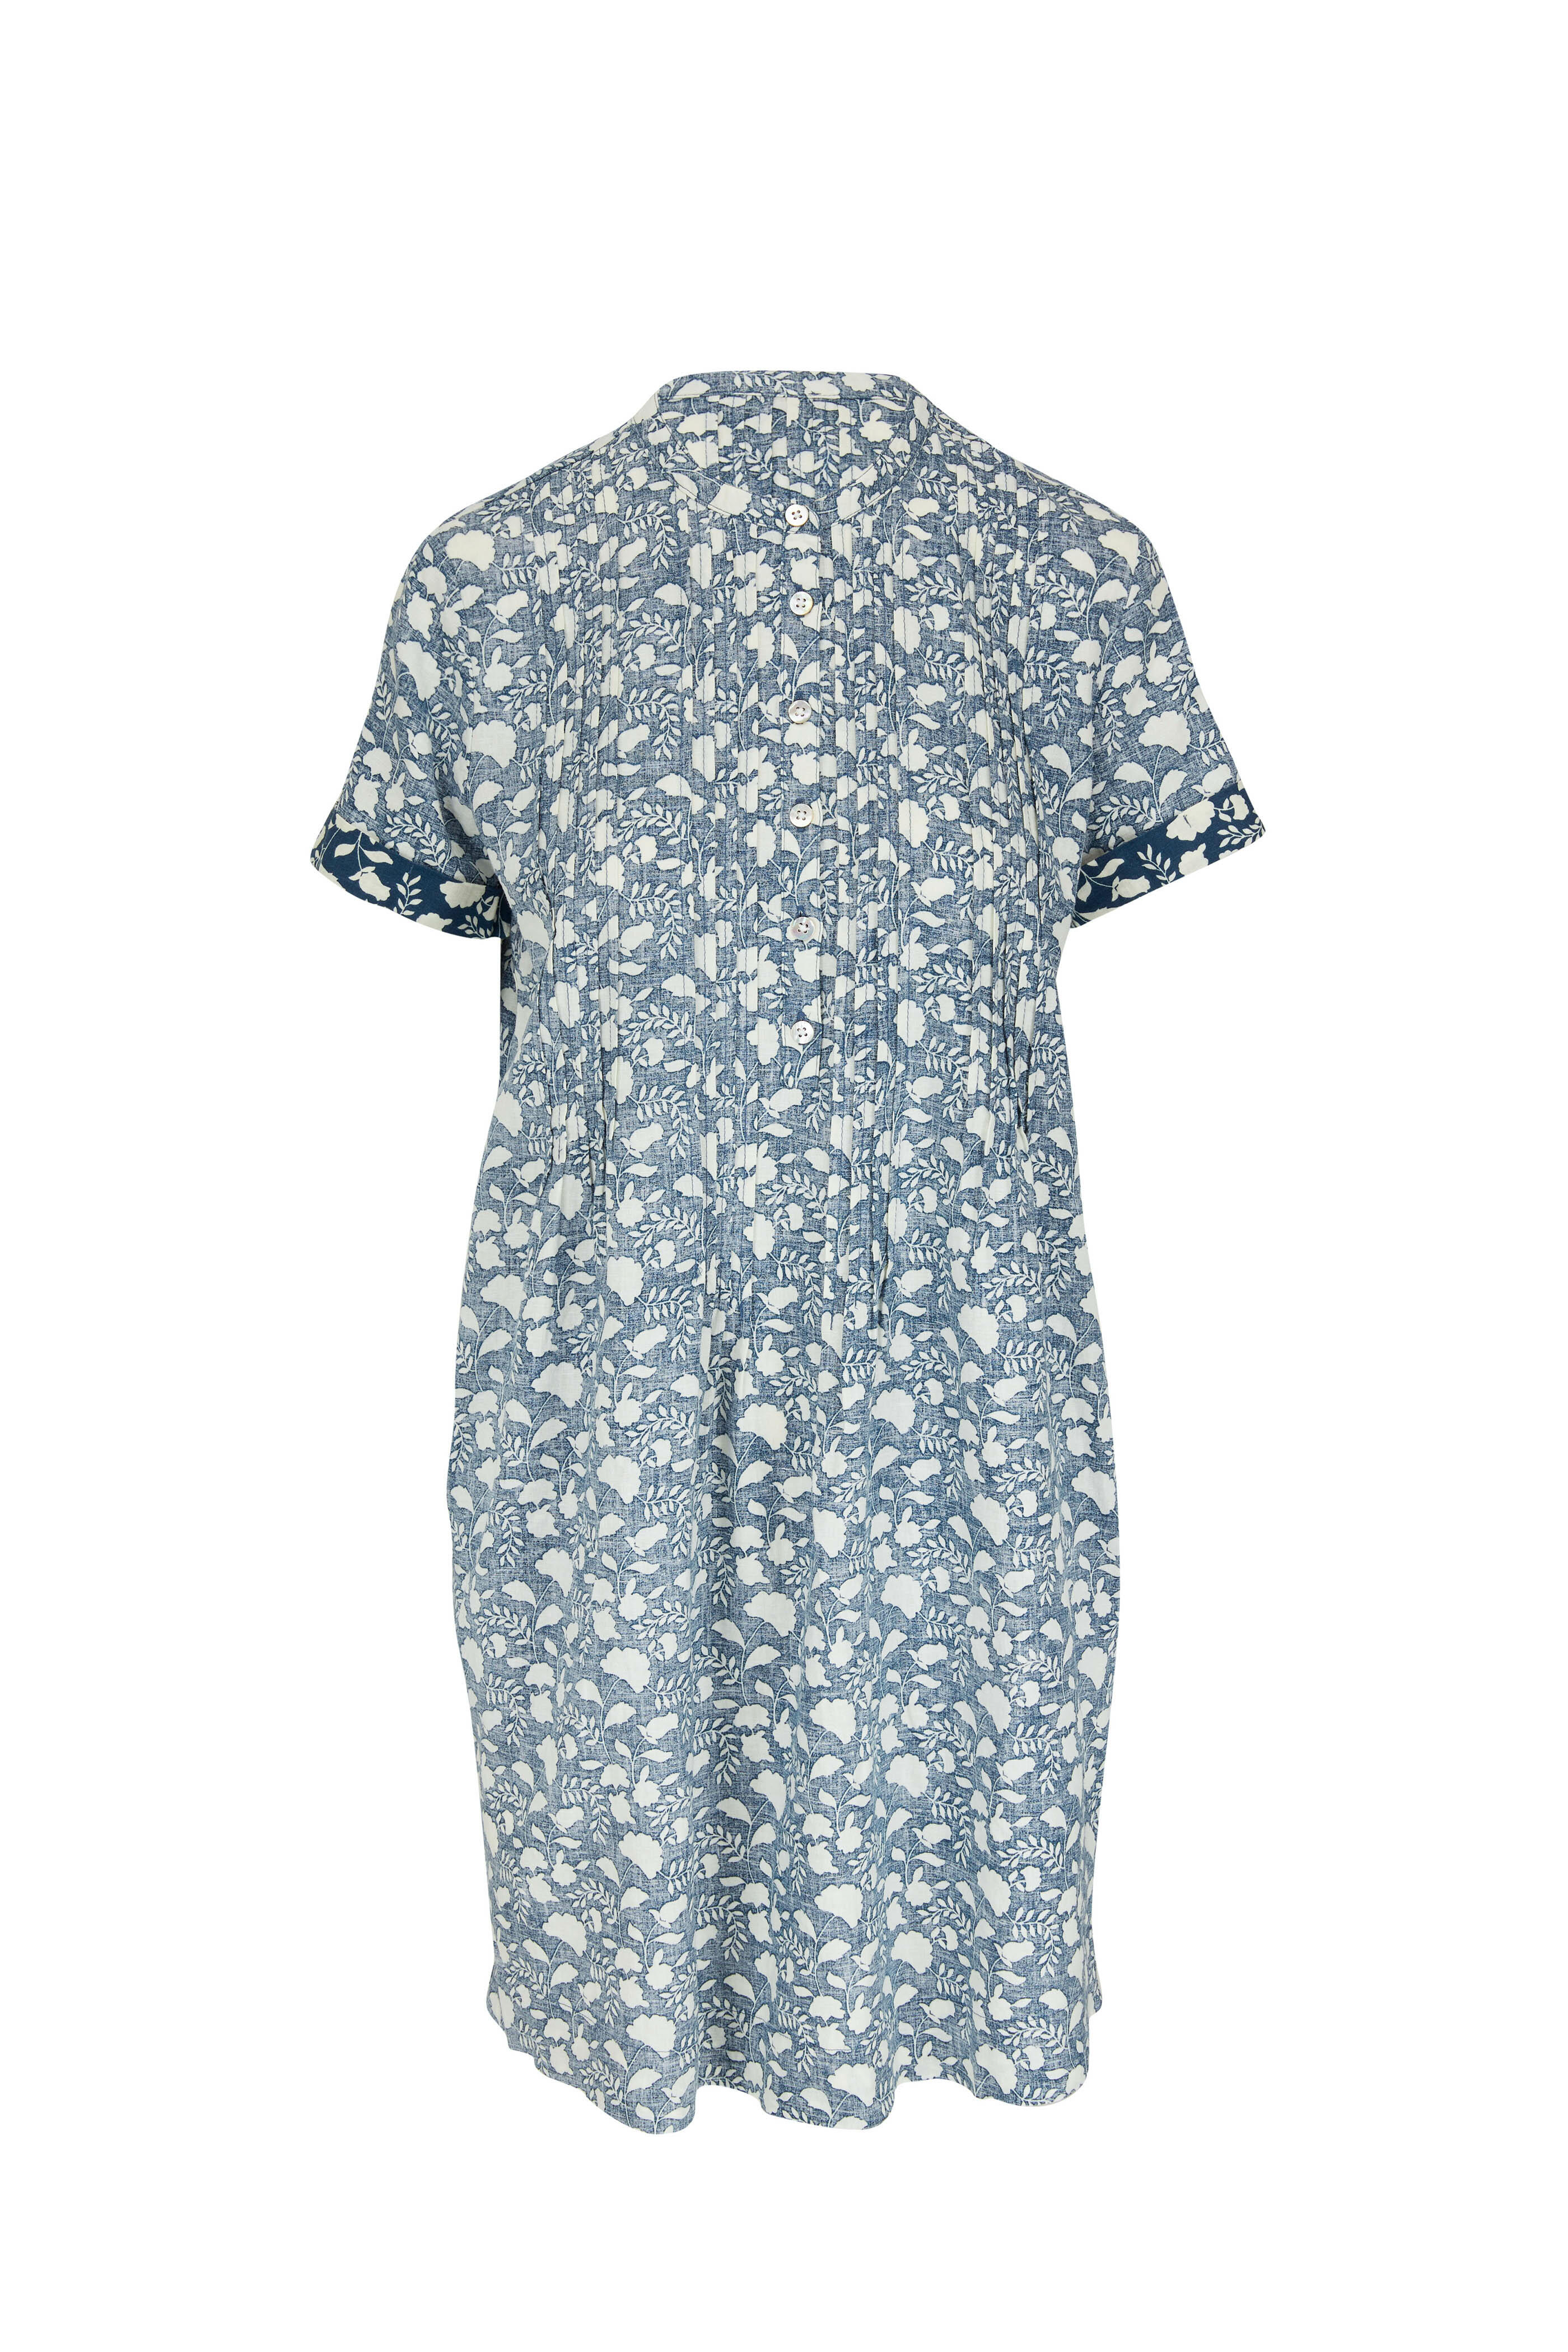 Faherty Brand - Gemina Indigo Floral Linen Dress